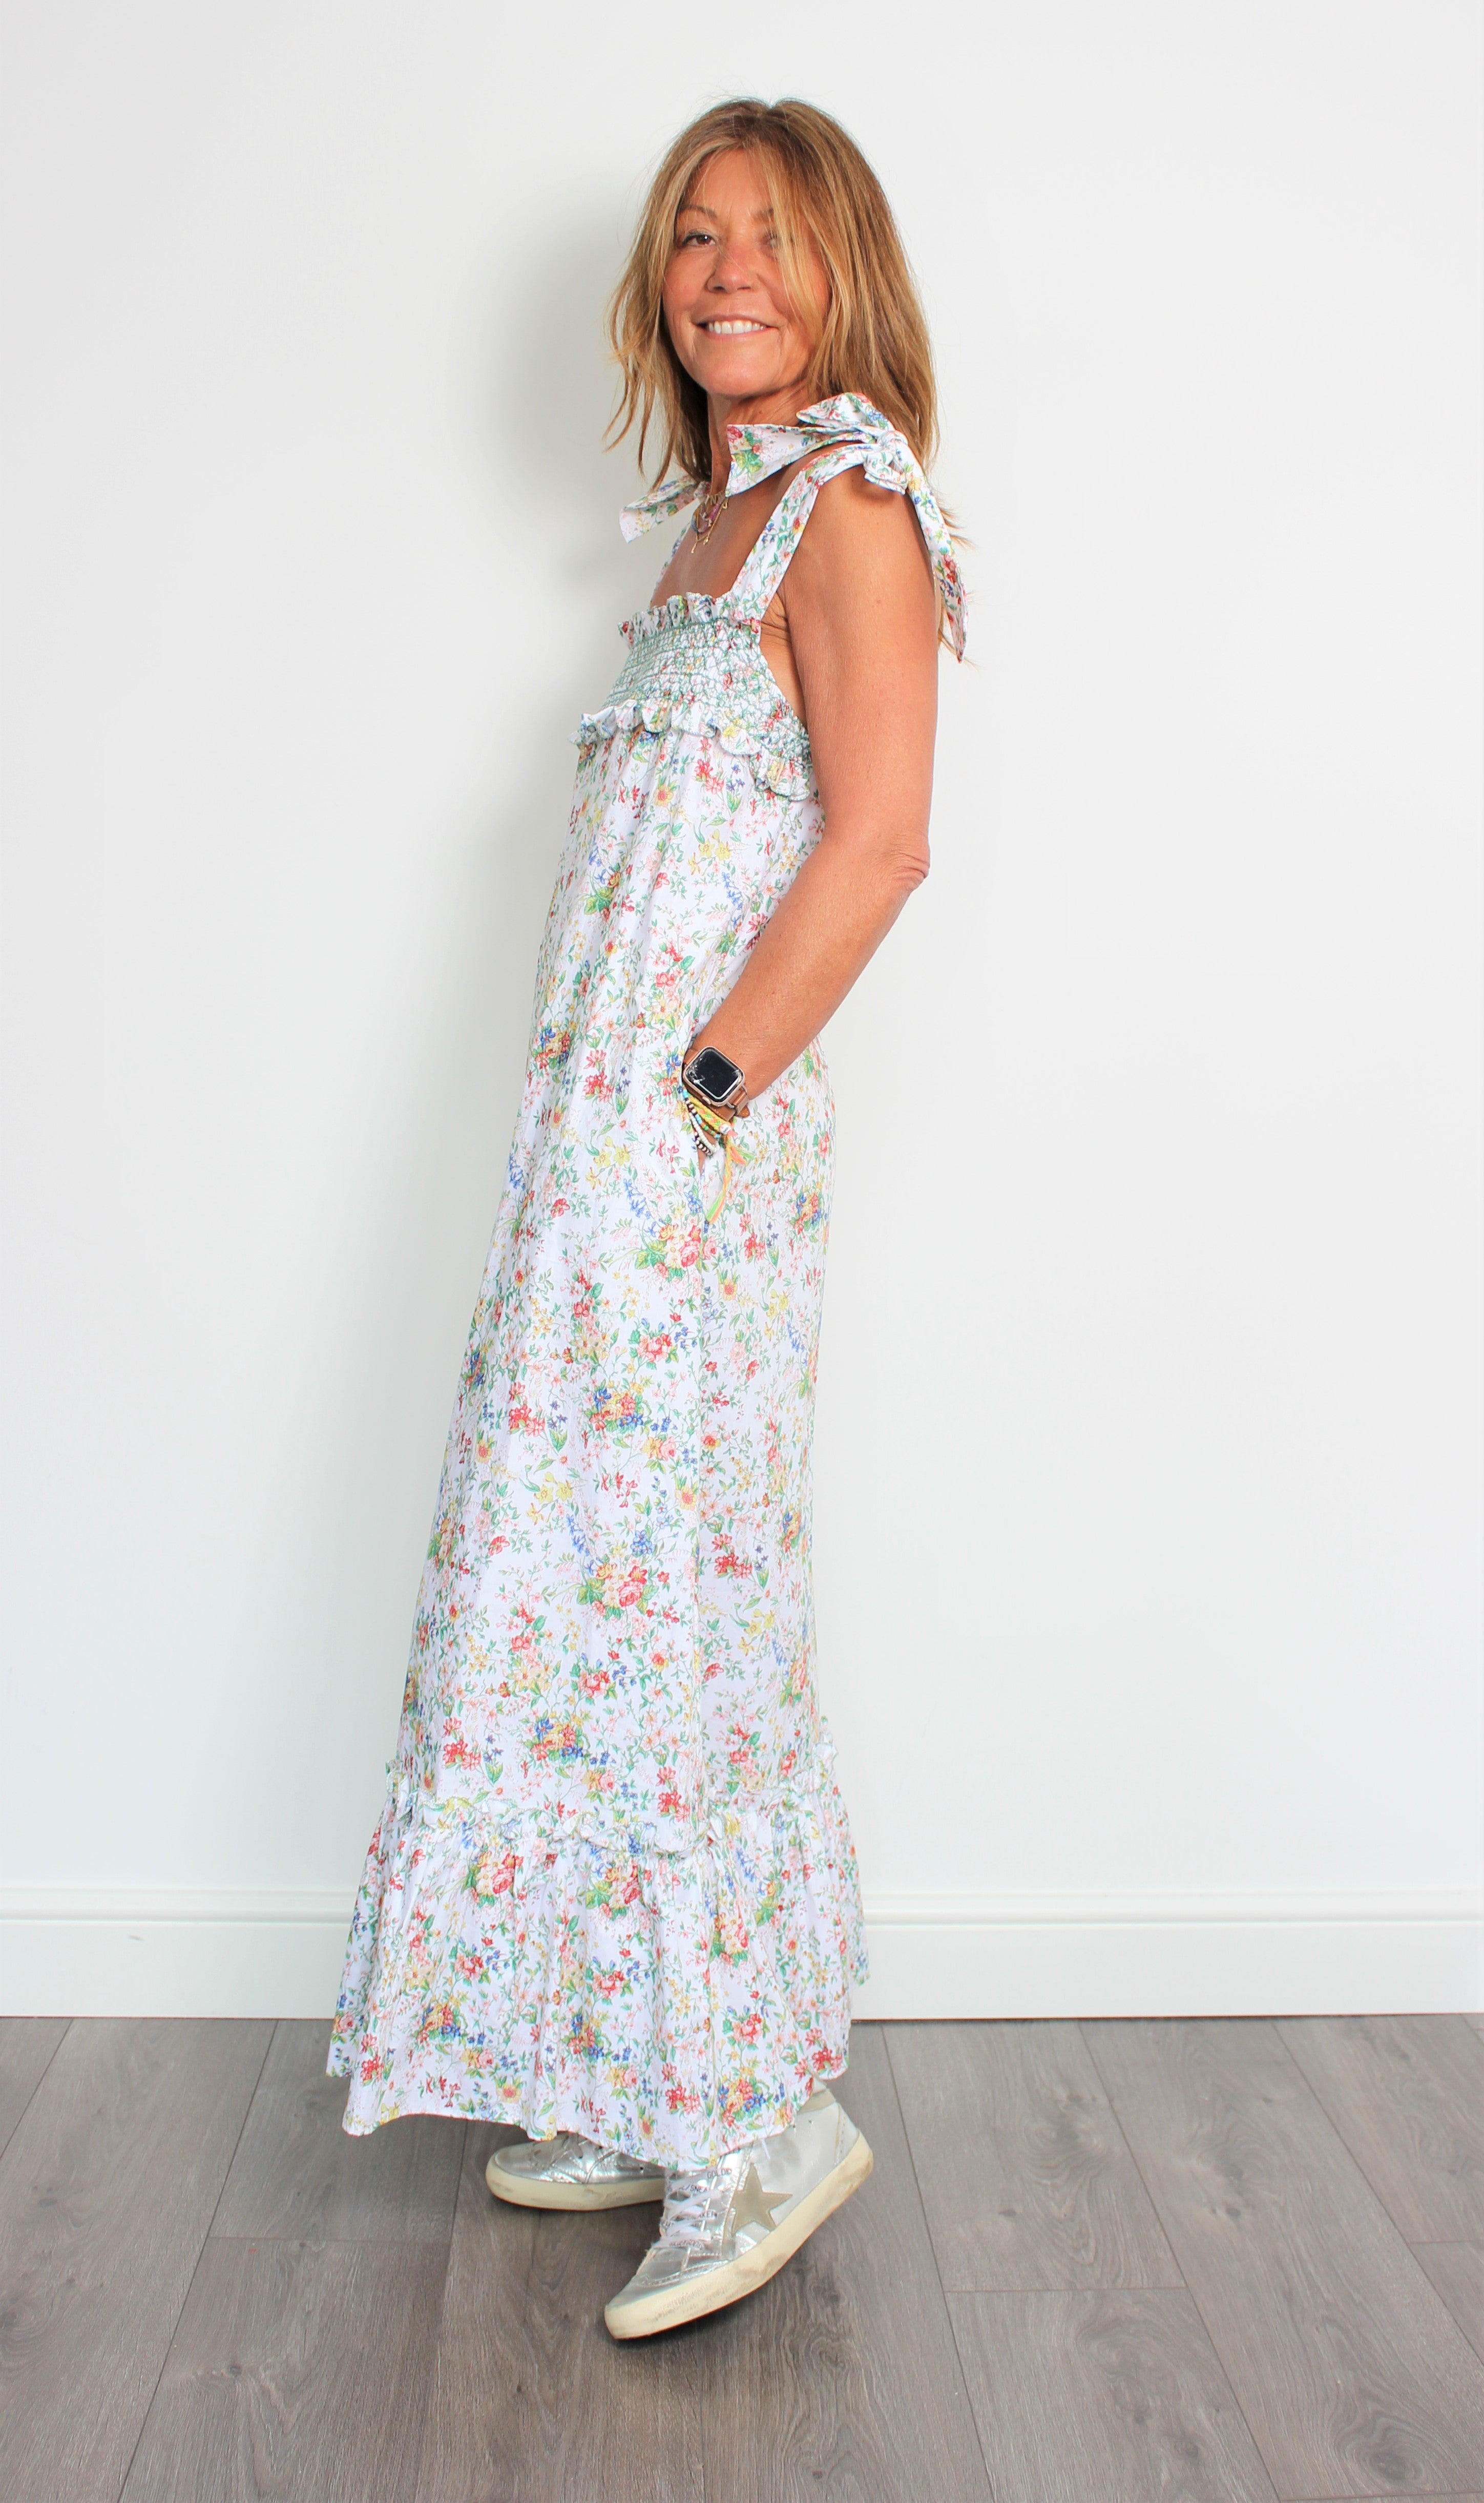 Loretta Caponi Armida floral-print cotton dress